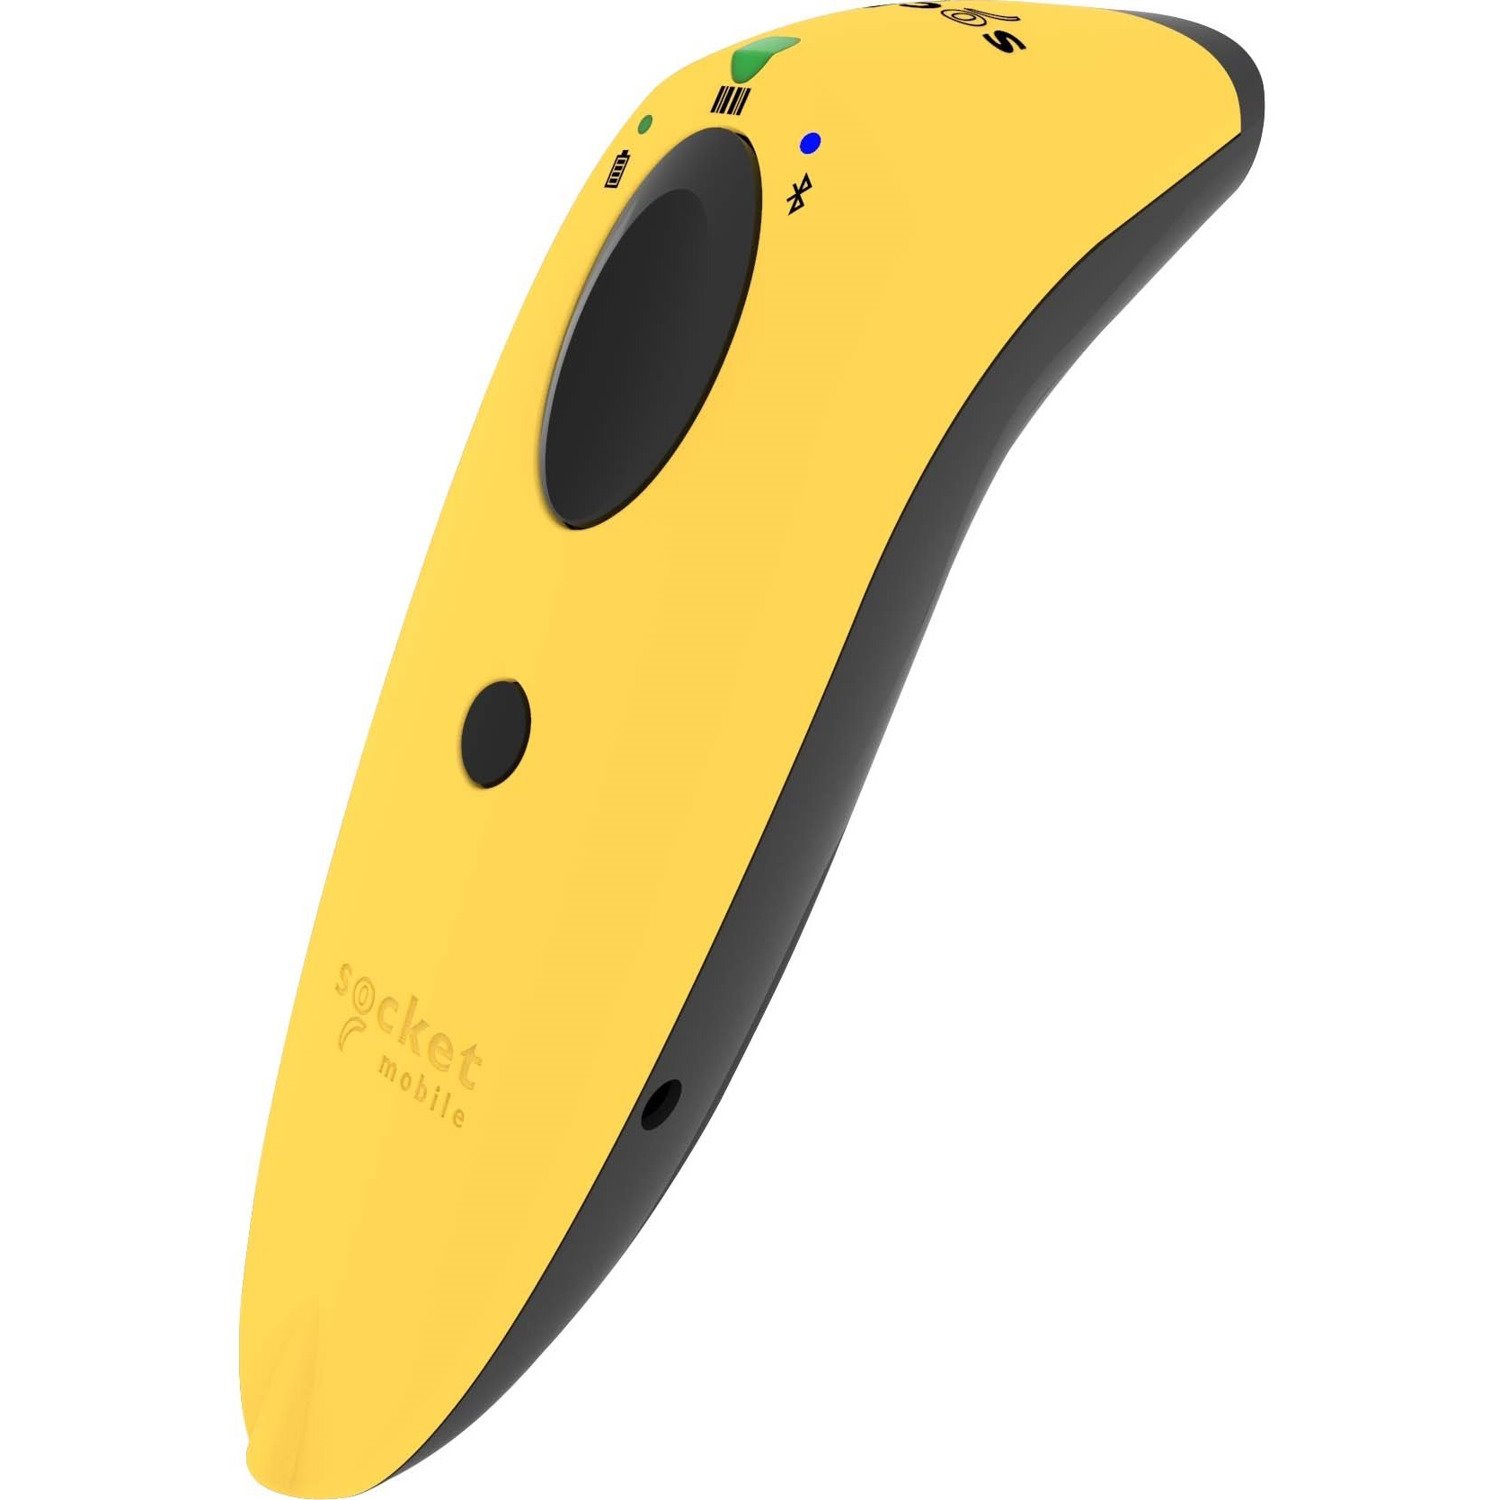 Socket Mobile SocketScan S730 Handheld Barcode Scanner - Wireless Connectivity - Yellow